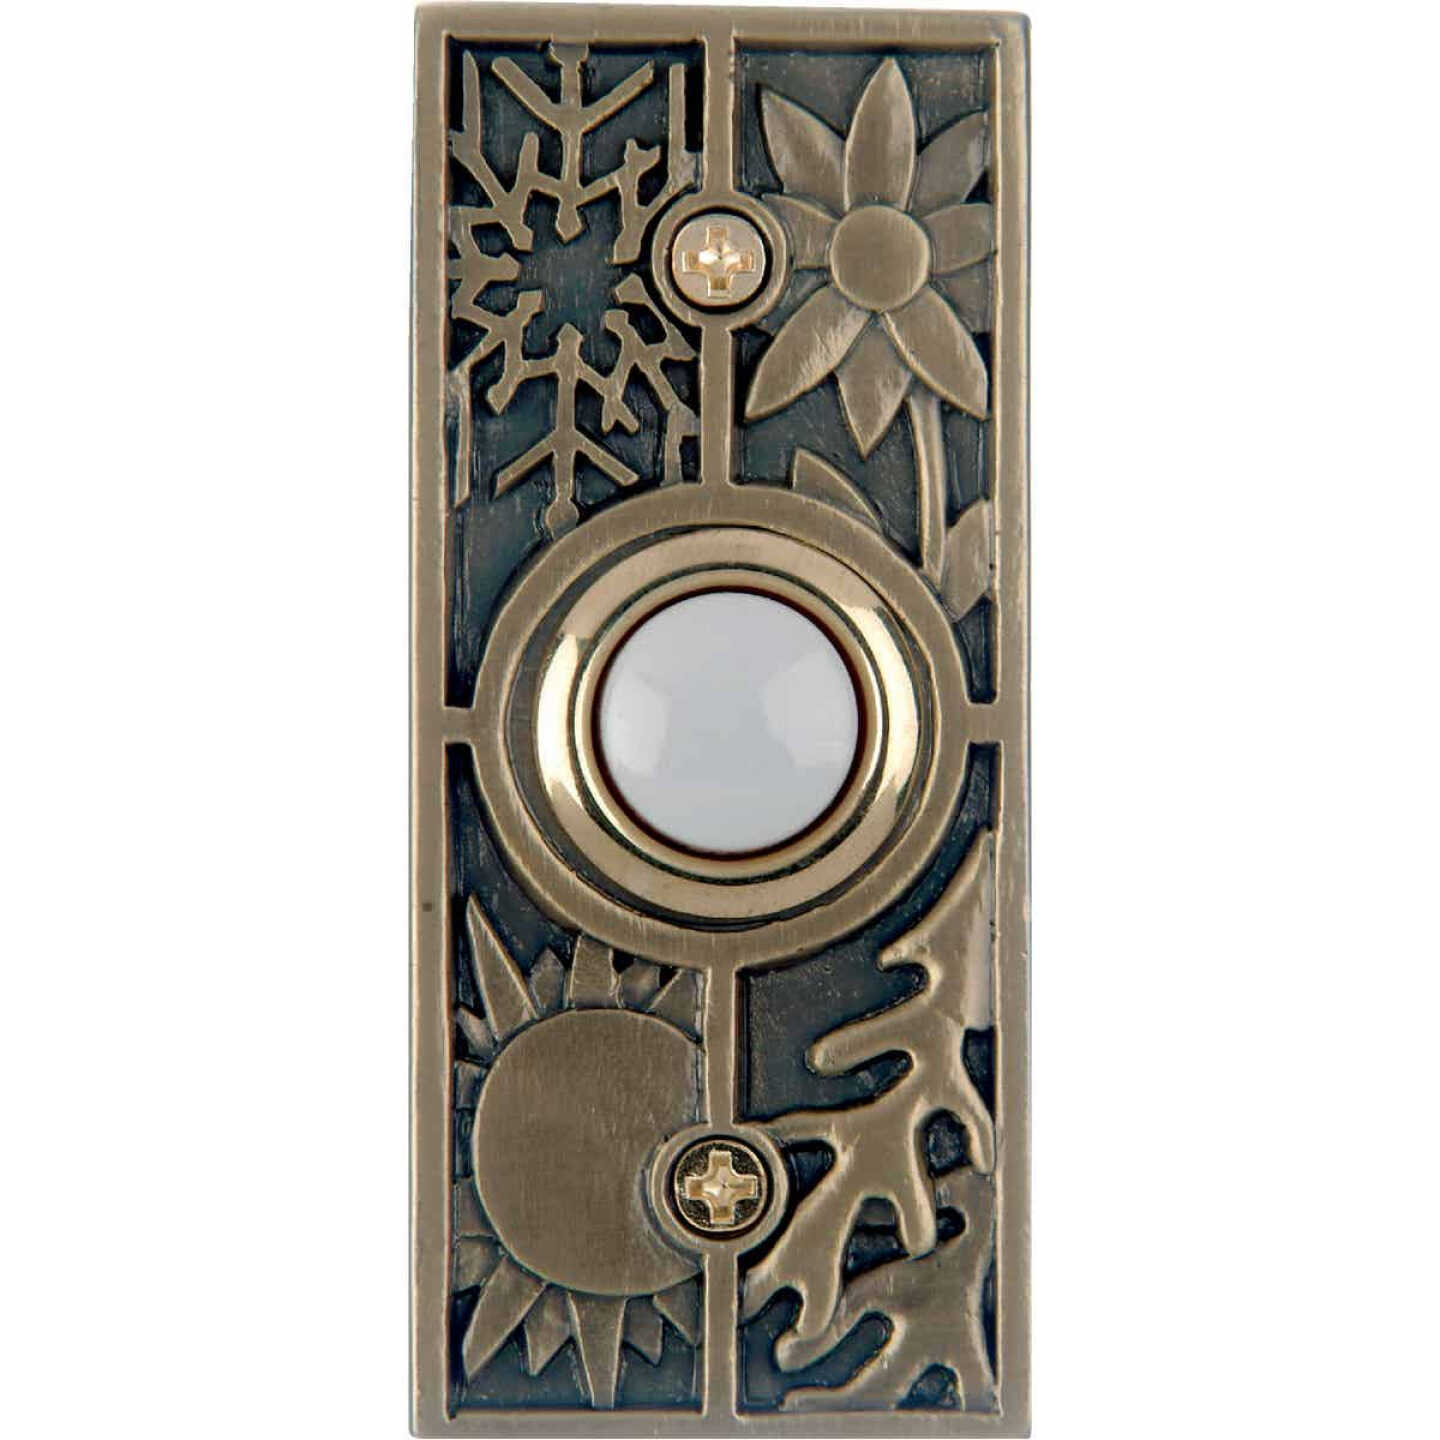 Decorative Doorbell Button – Finest Quality Bell Push Button